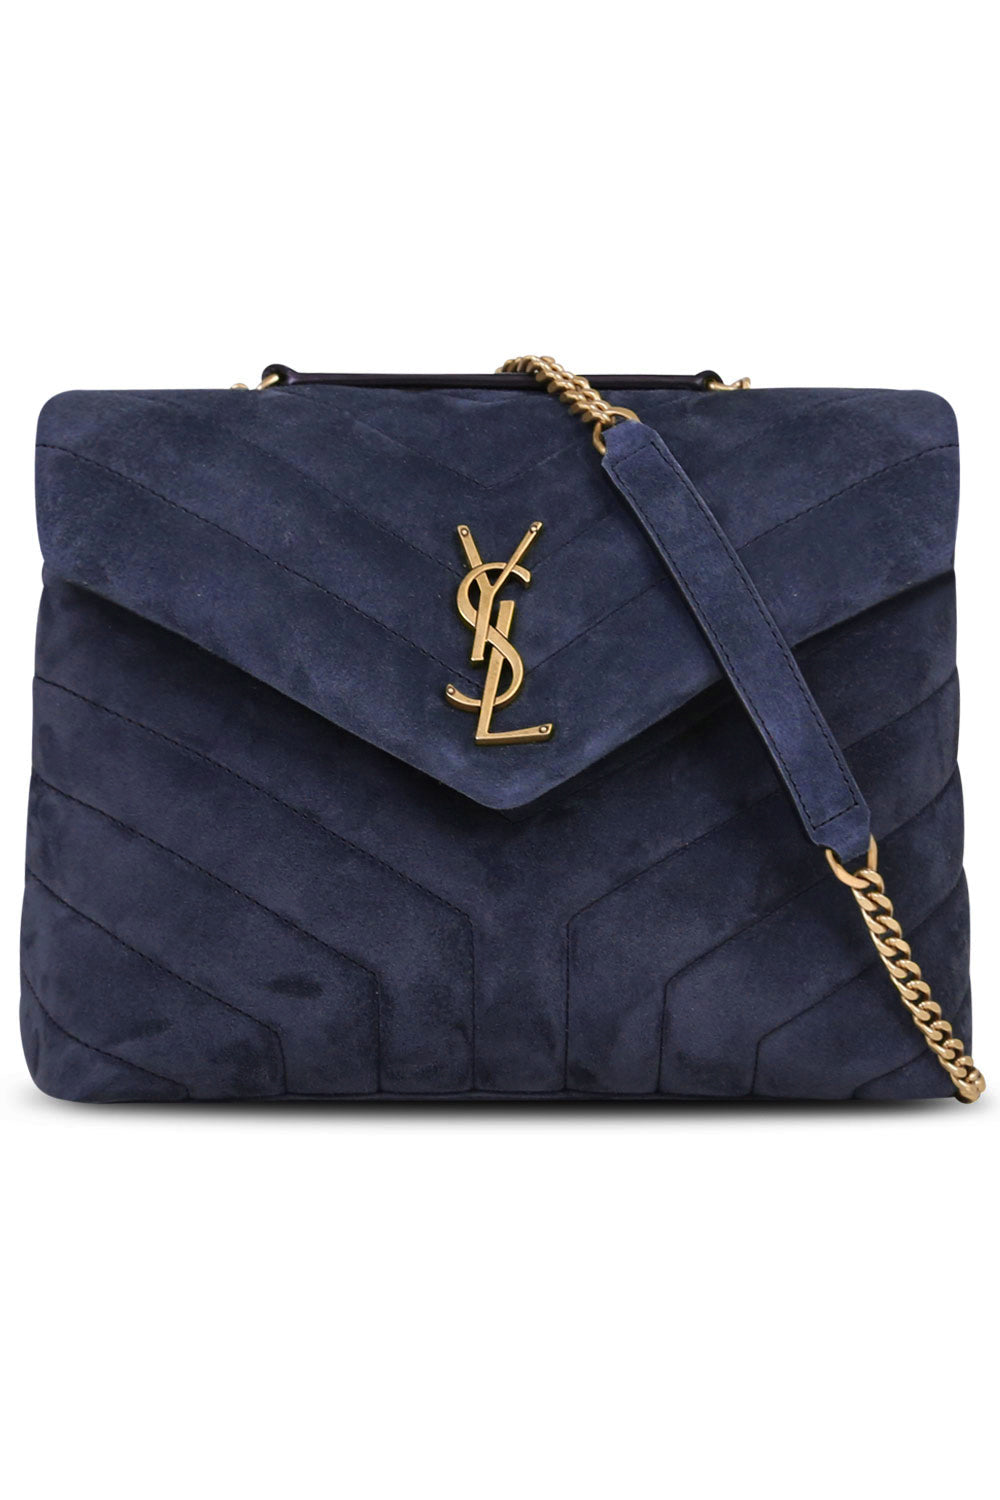 SAINT LAURENT LARGE CLASSIC COLLEGE BAG IN MATELASSE LEATHER GREEN | Saint  laurent handbags, Ysl handbags, Fashion handbags